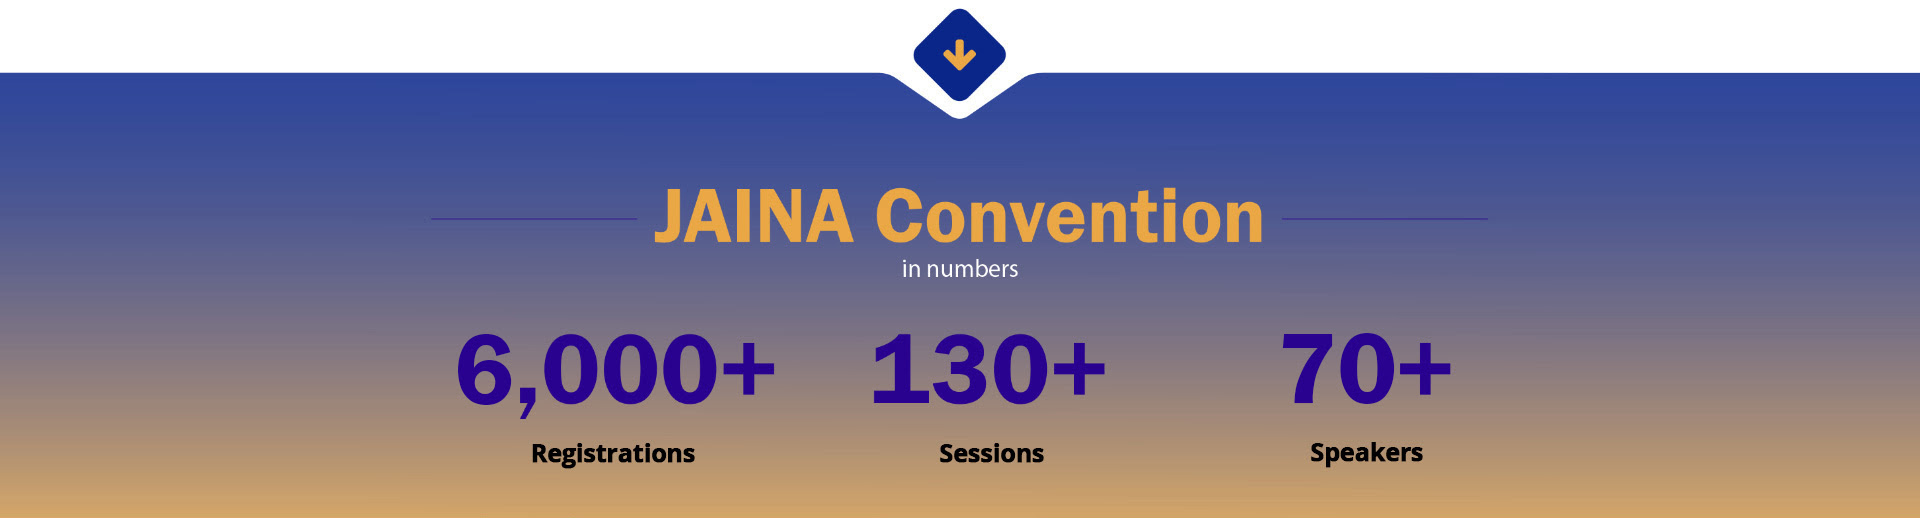 JAINA Convention